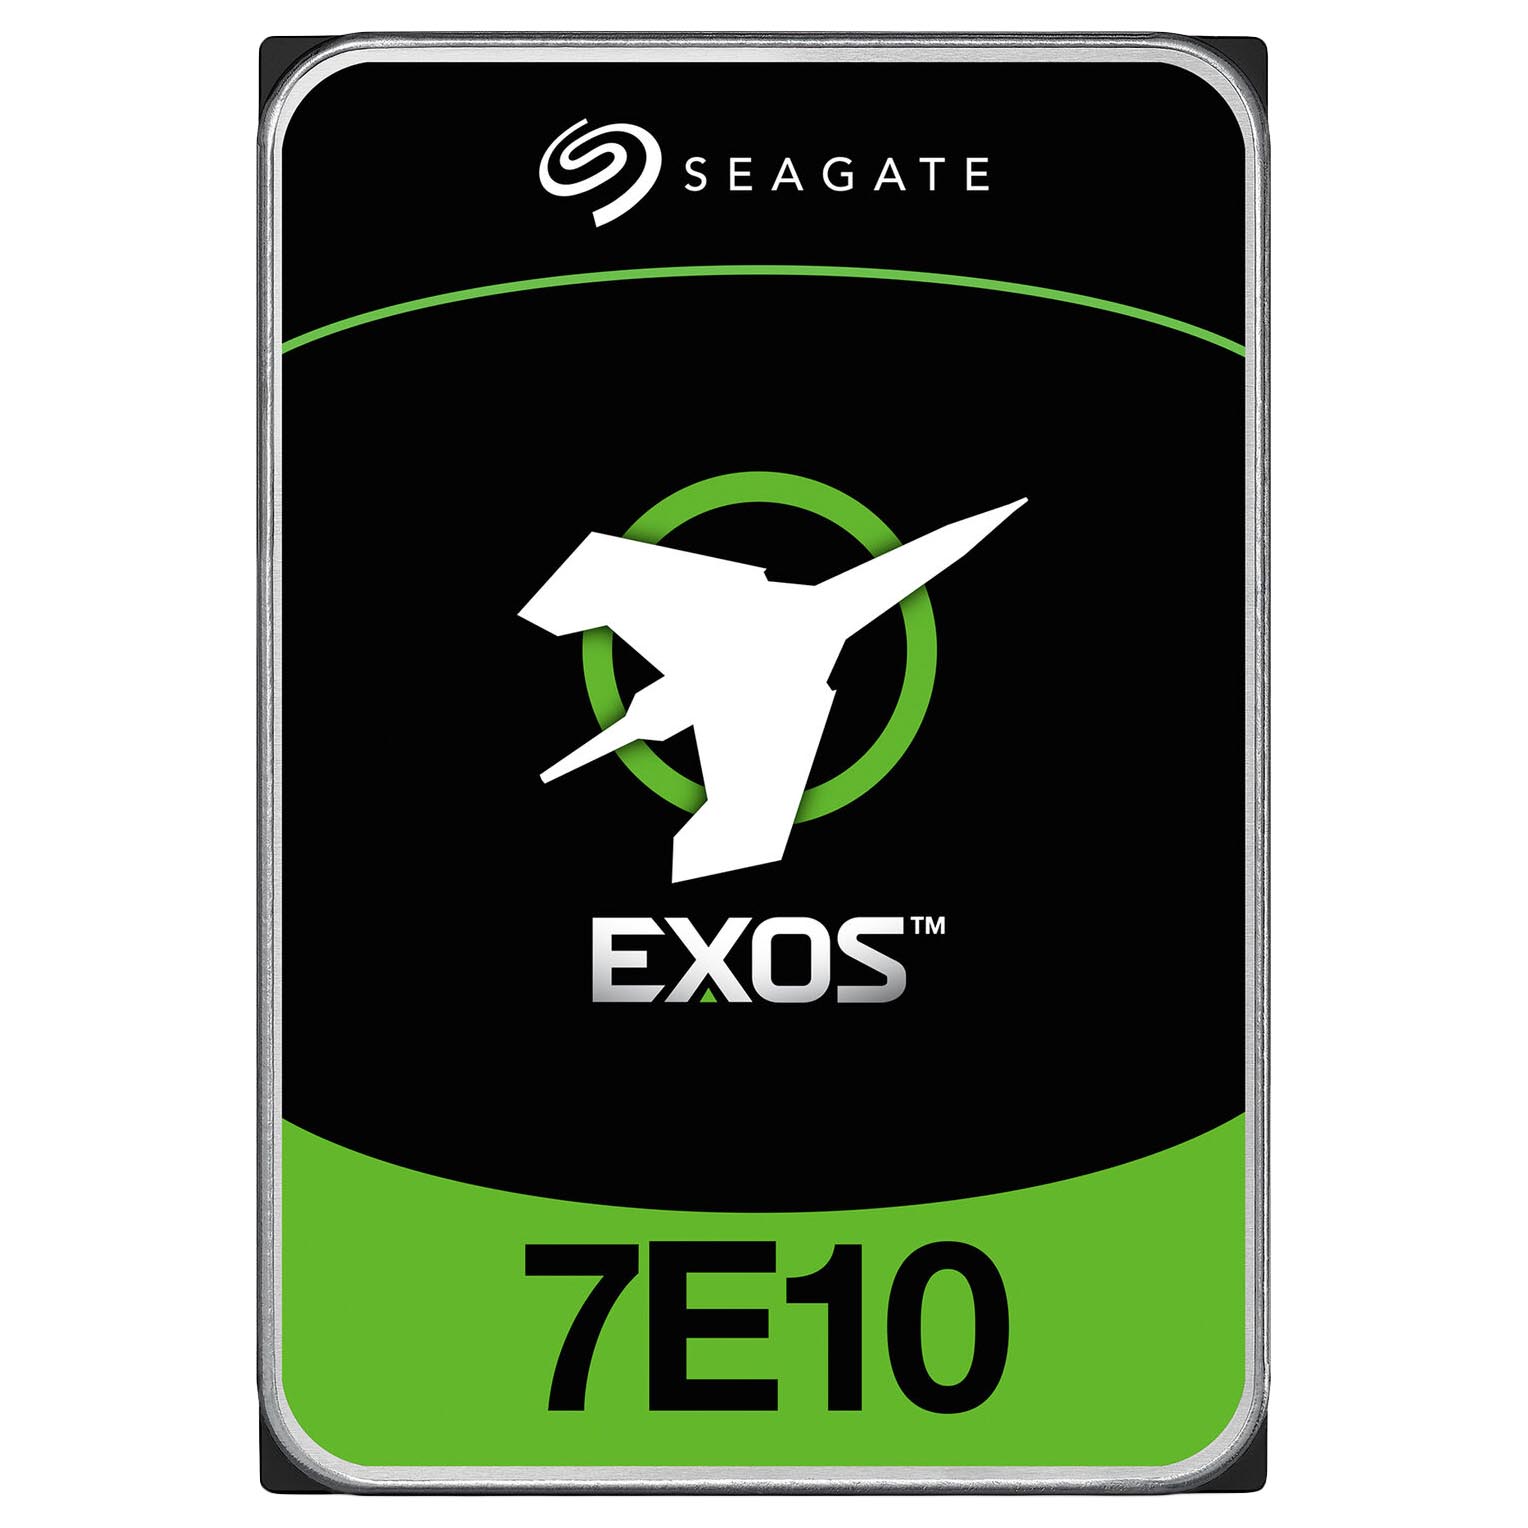 Внутренний жесткий диск Seagate Exos 7E10, ST8000NM018B, 8 Тб жесткий диск seagate exos 7e10 6 тб st6000nm019b